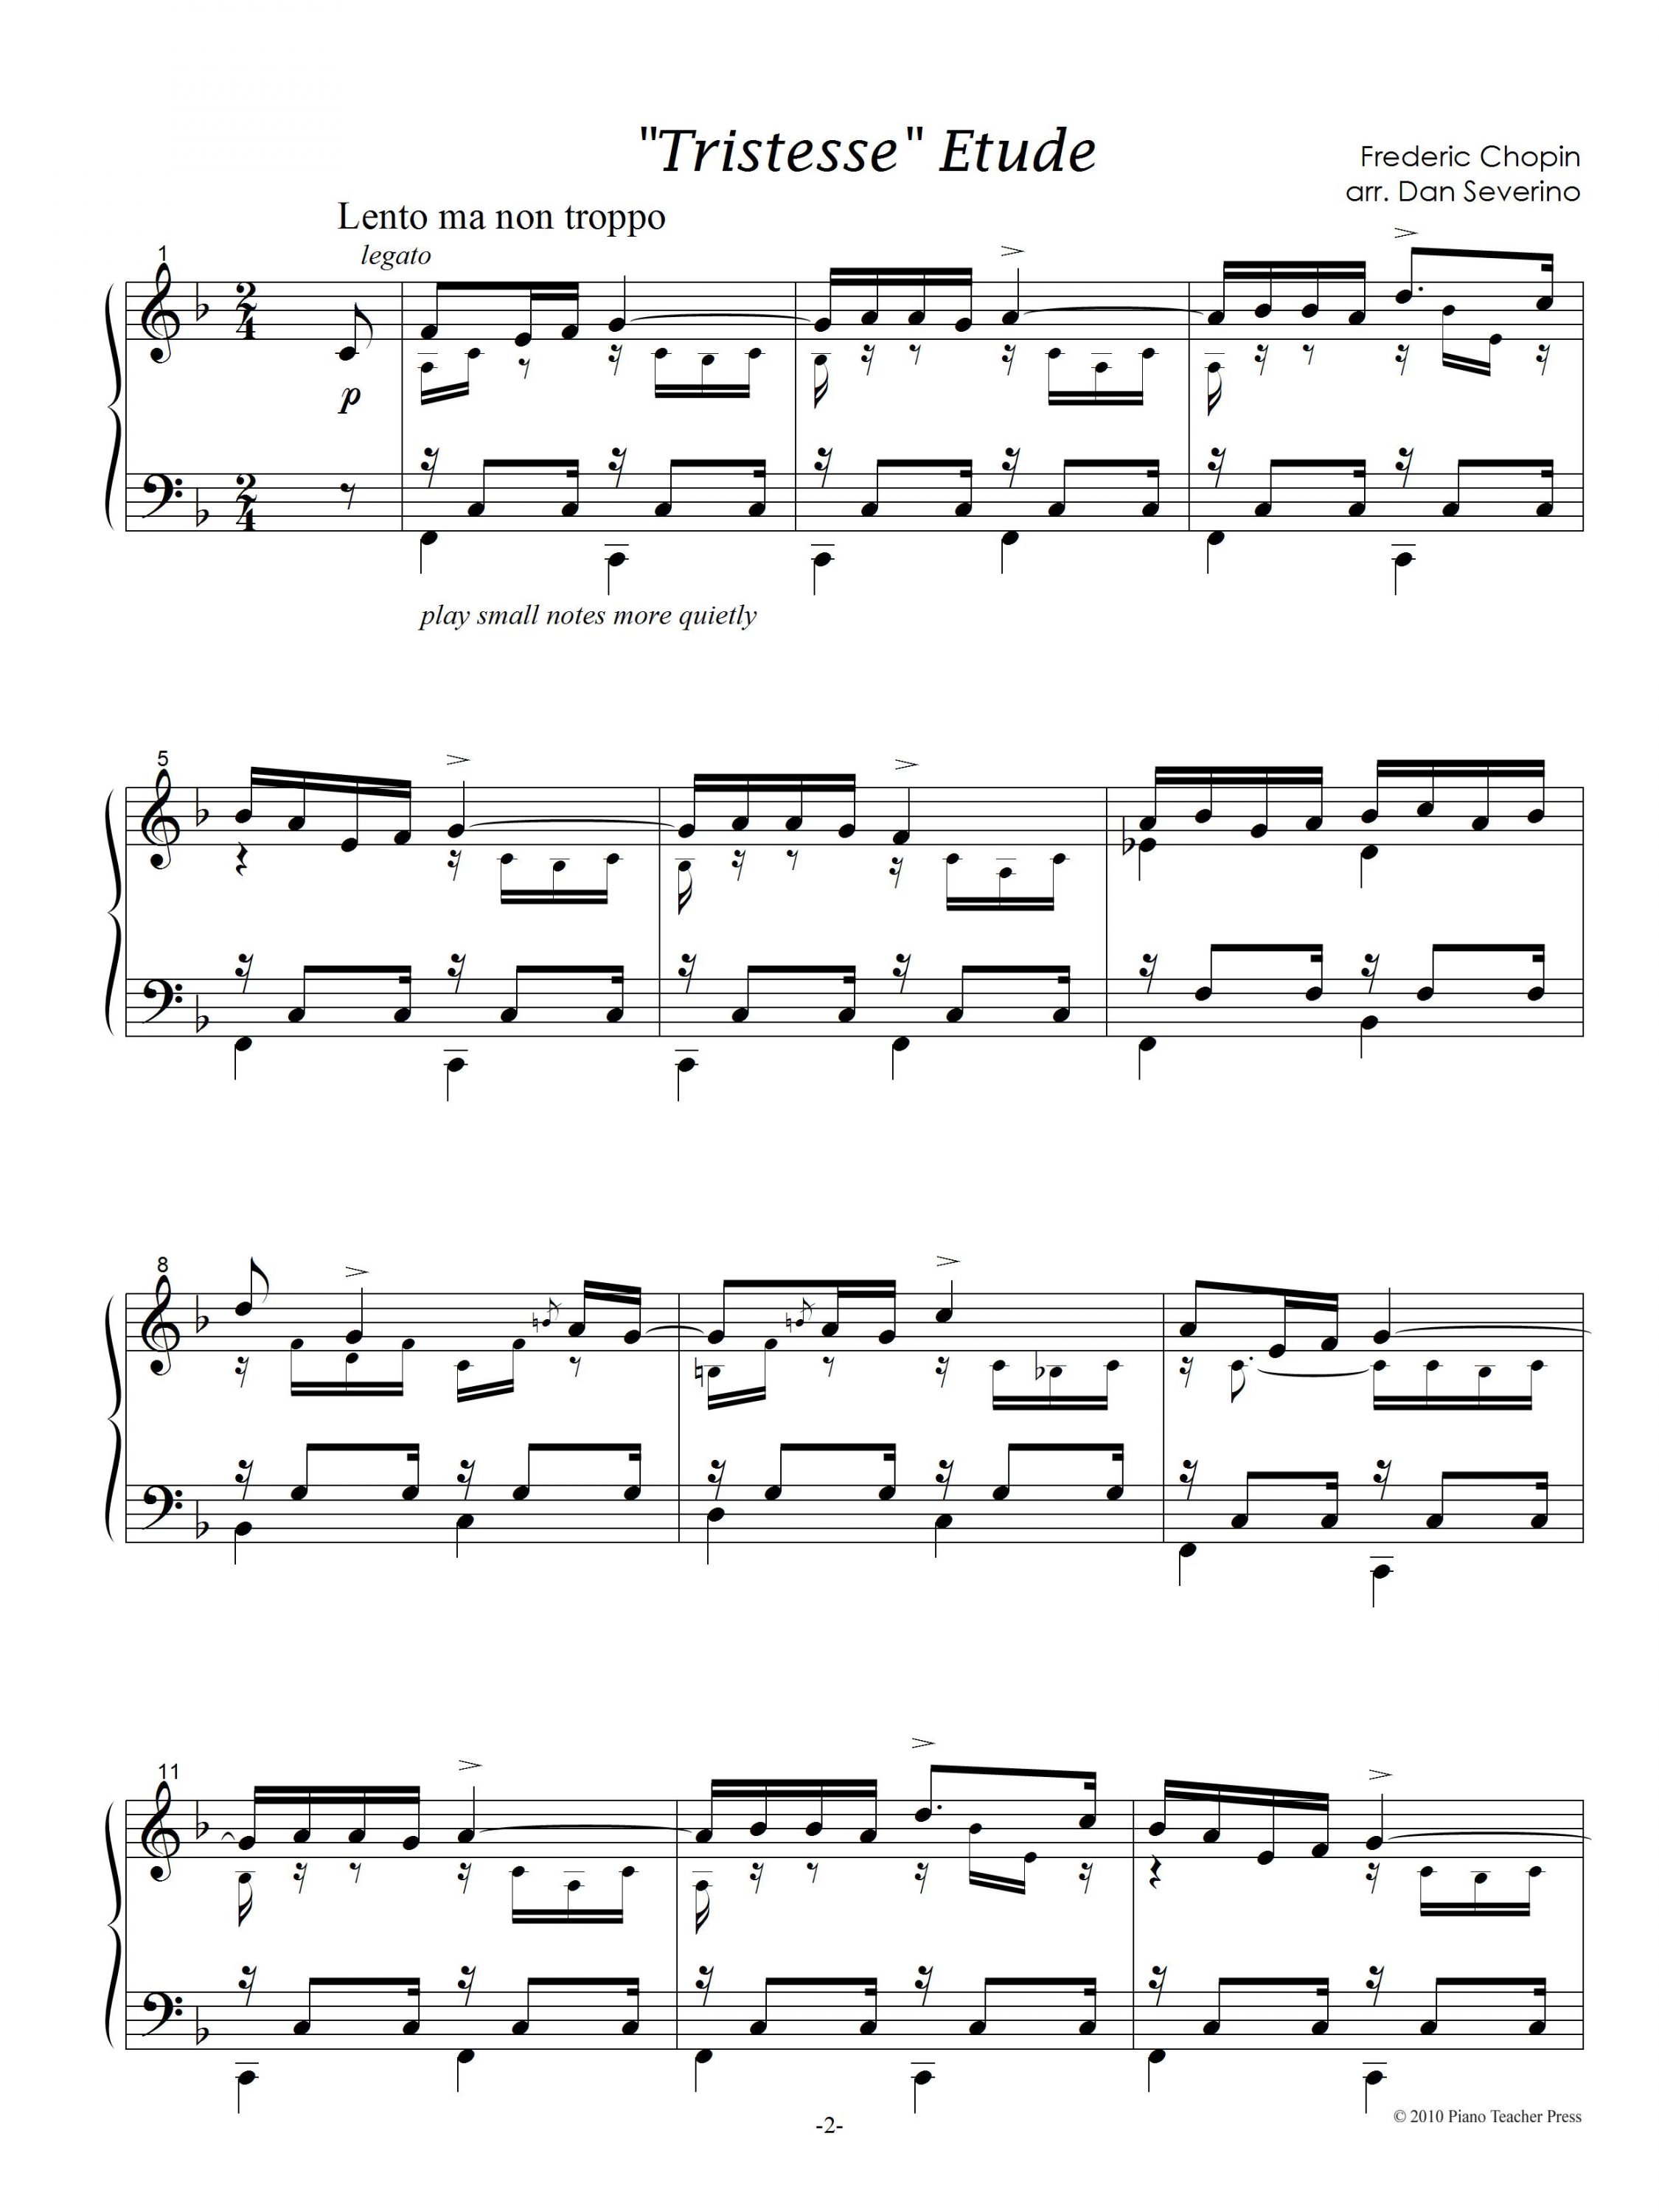 WIX - page 1 Chopin Etude 3